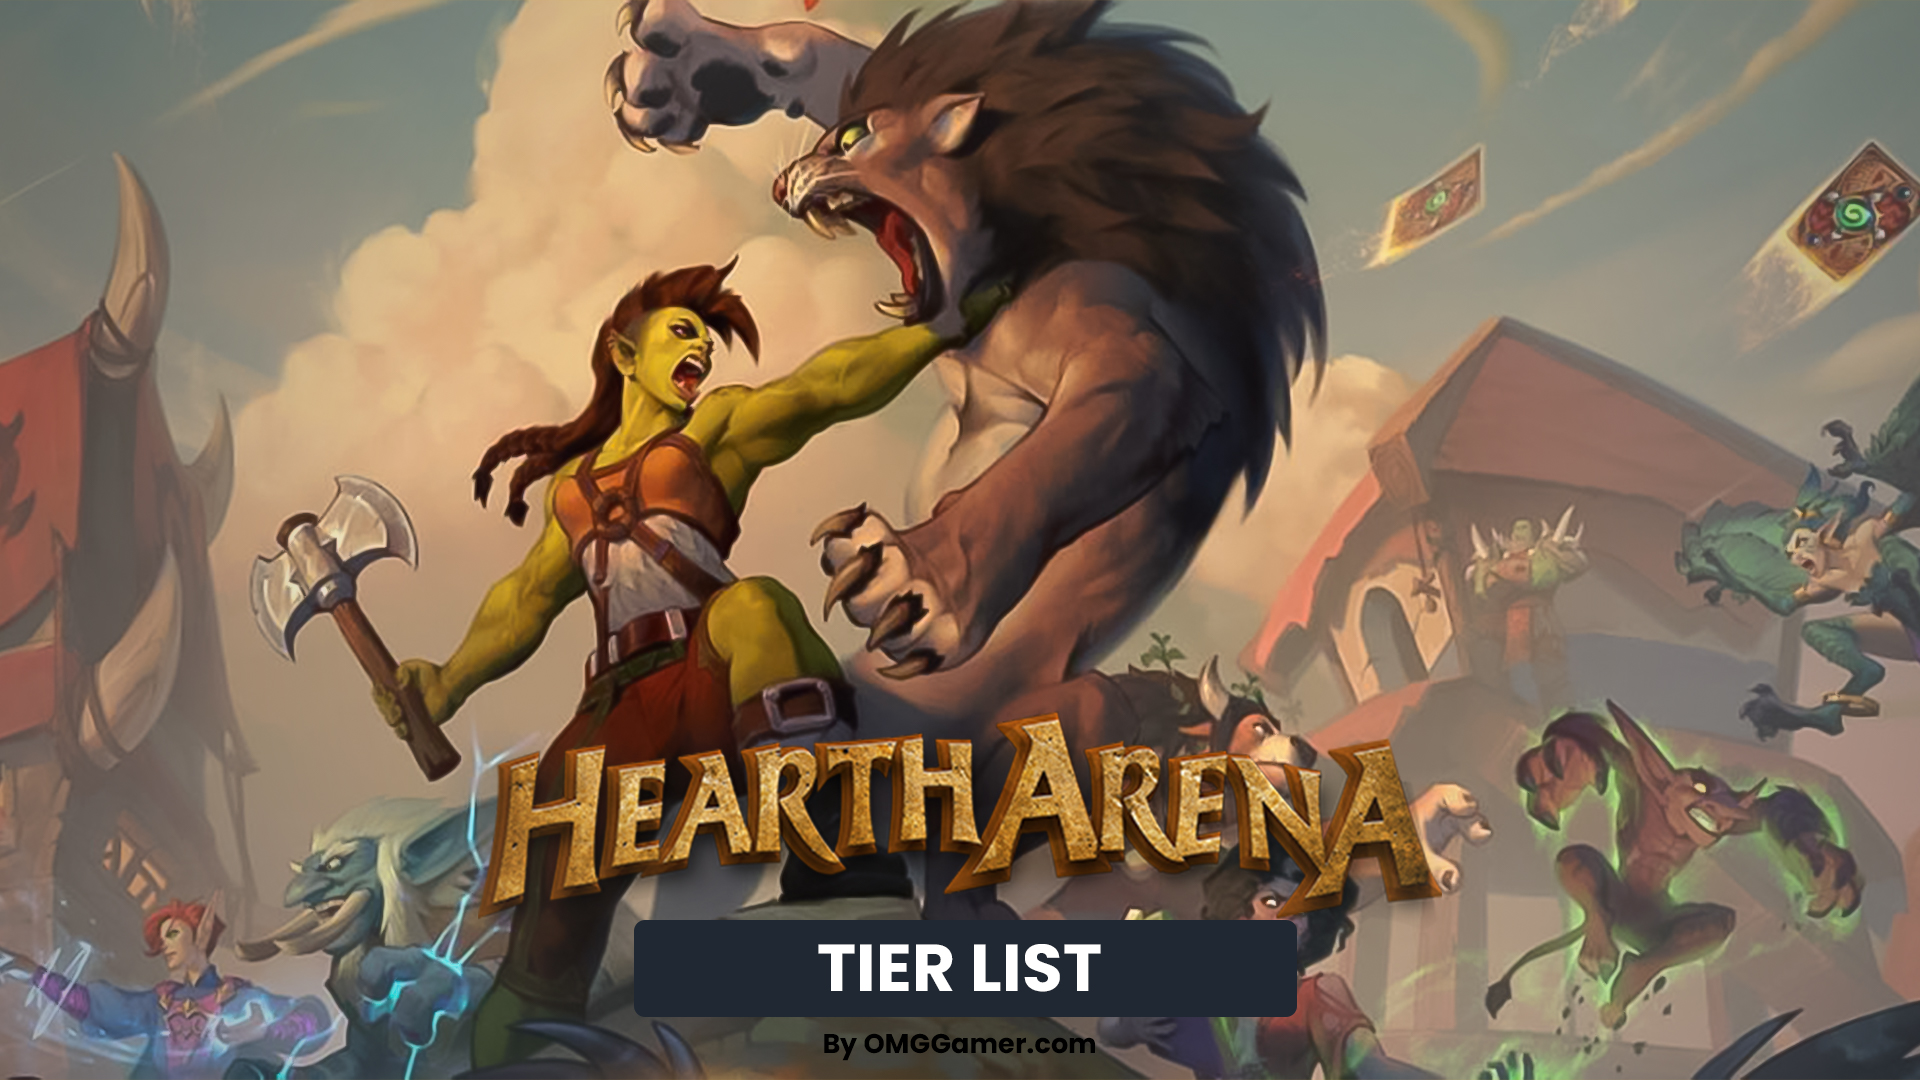 Hearthstone Arena Tier List